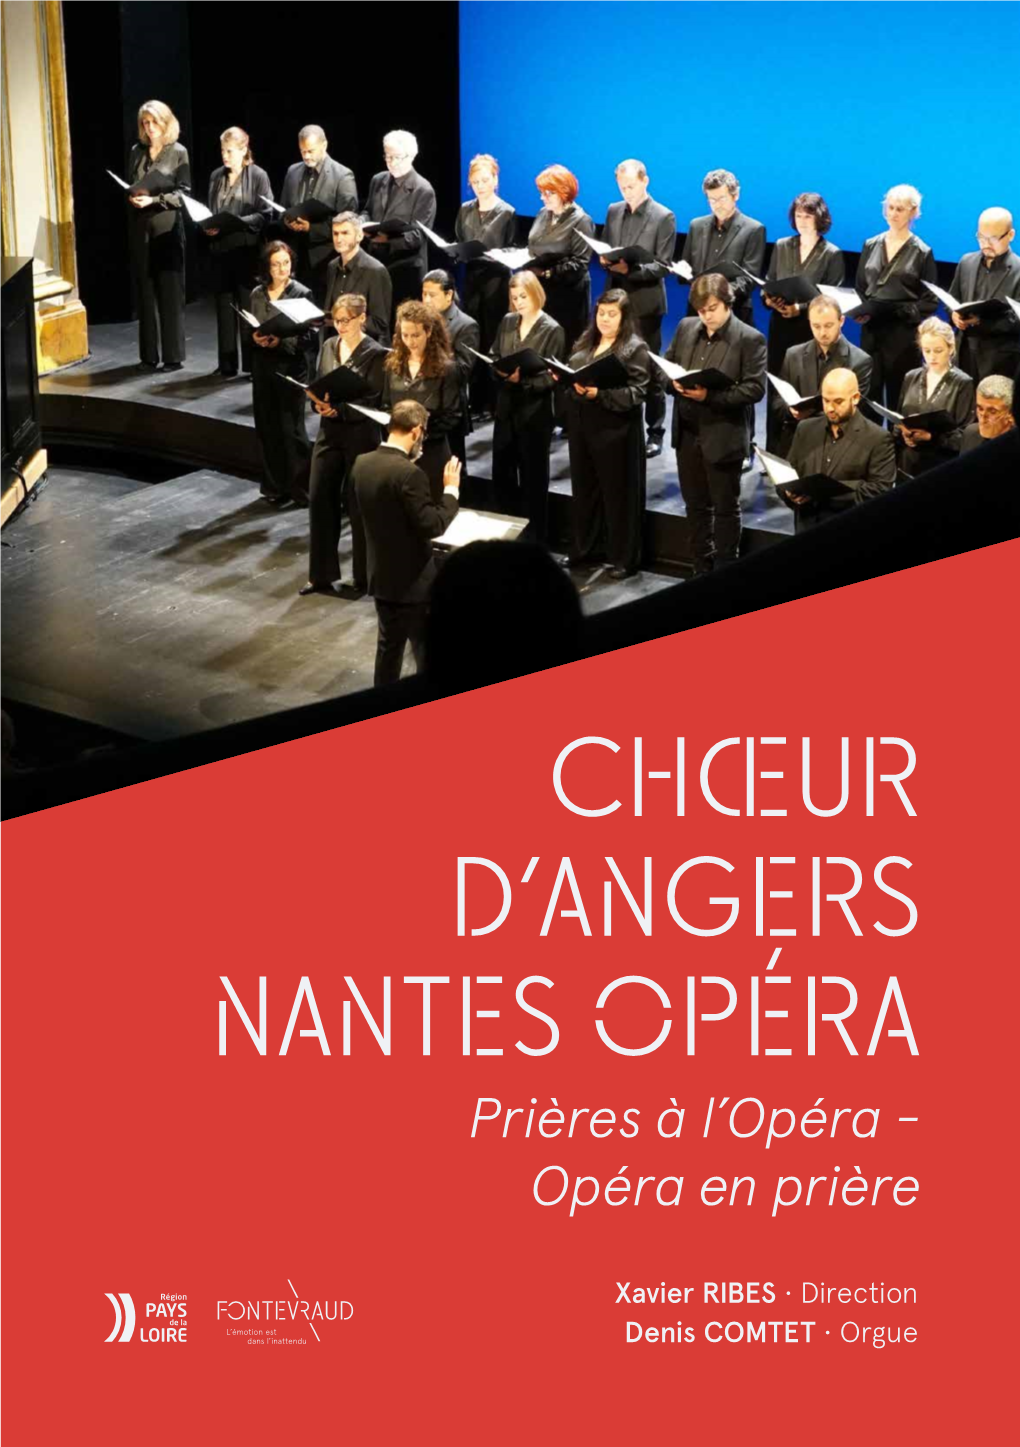 Programme "Opéra En Prières"